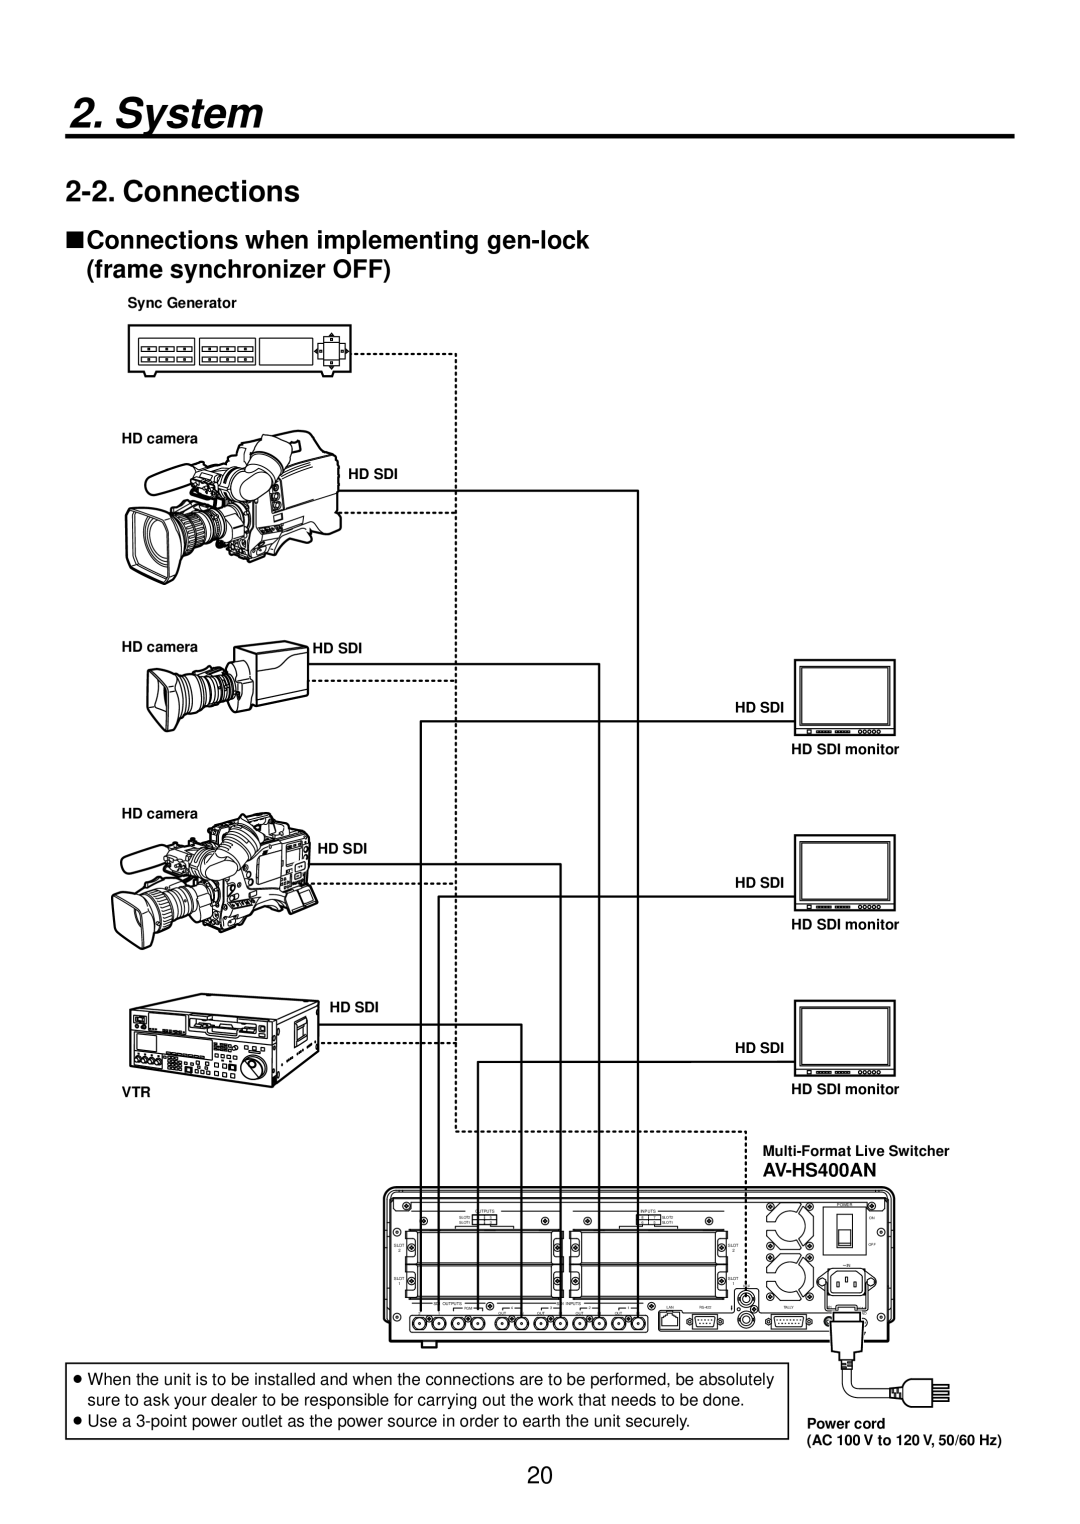 Panasonic AV-HS400AN Connections when implementing gen-lock frame synchronizer OFF, System, Hd Sdi, HD SDI monitor 